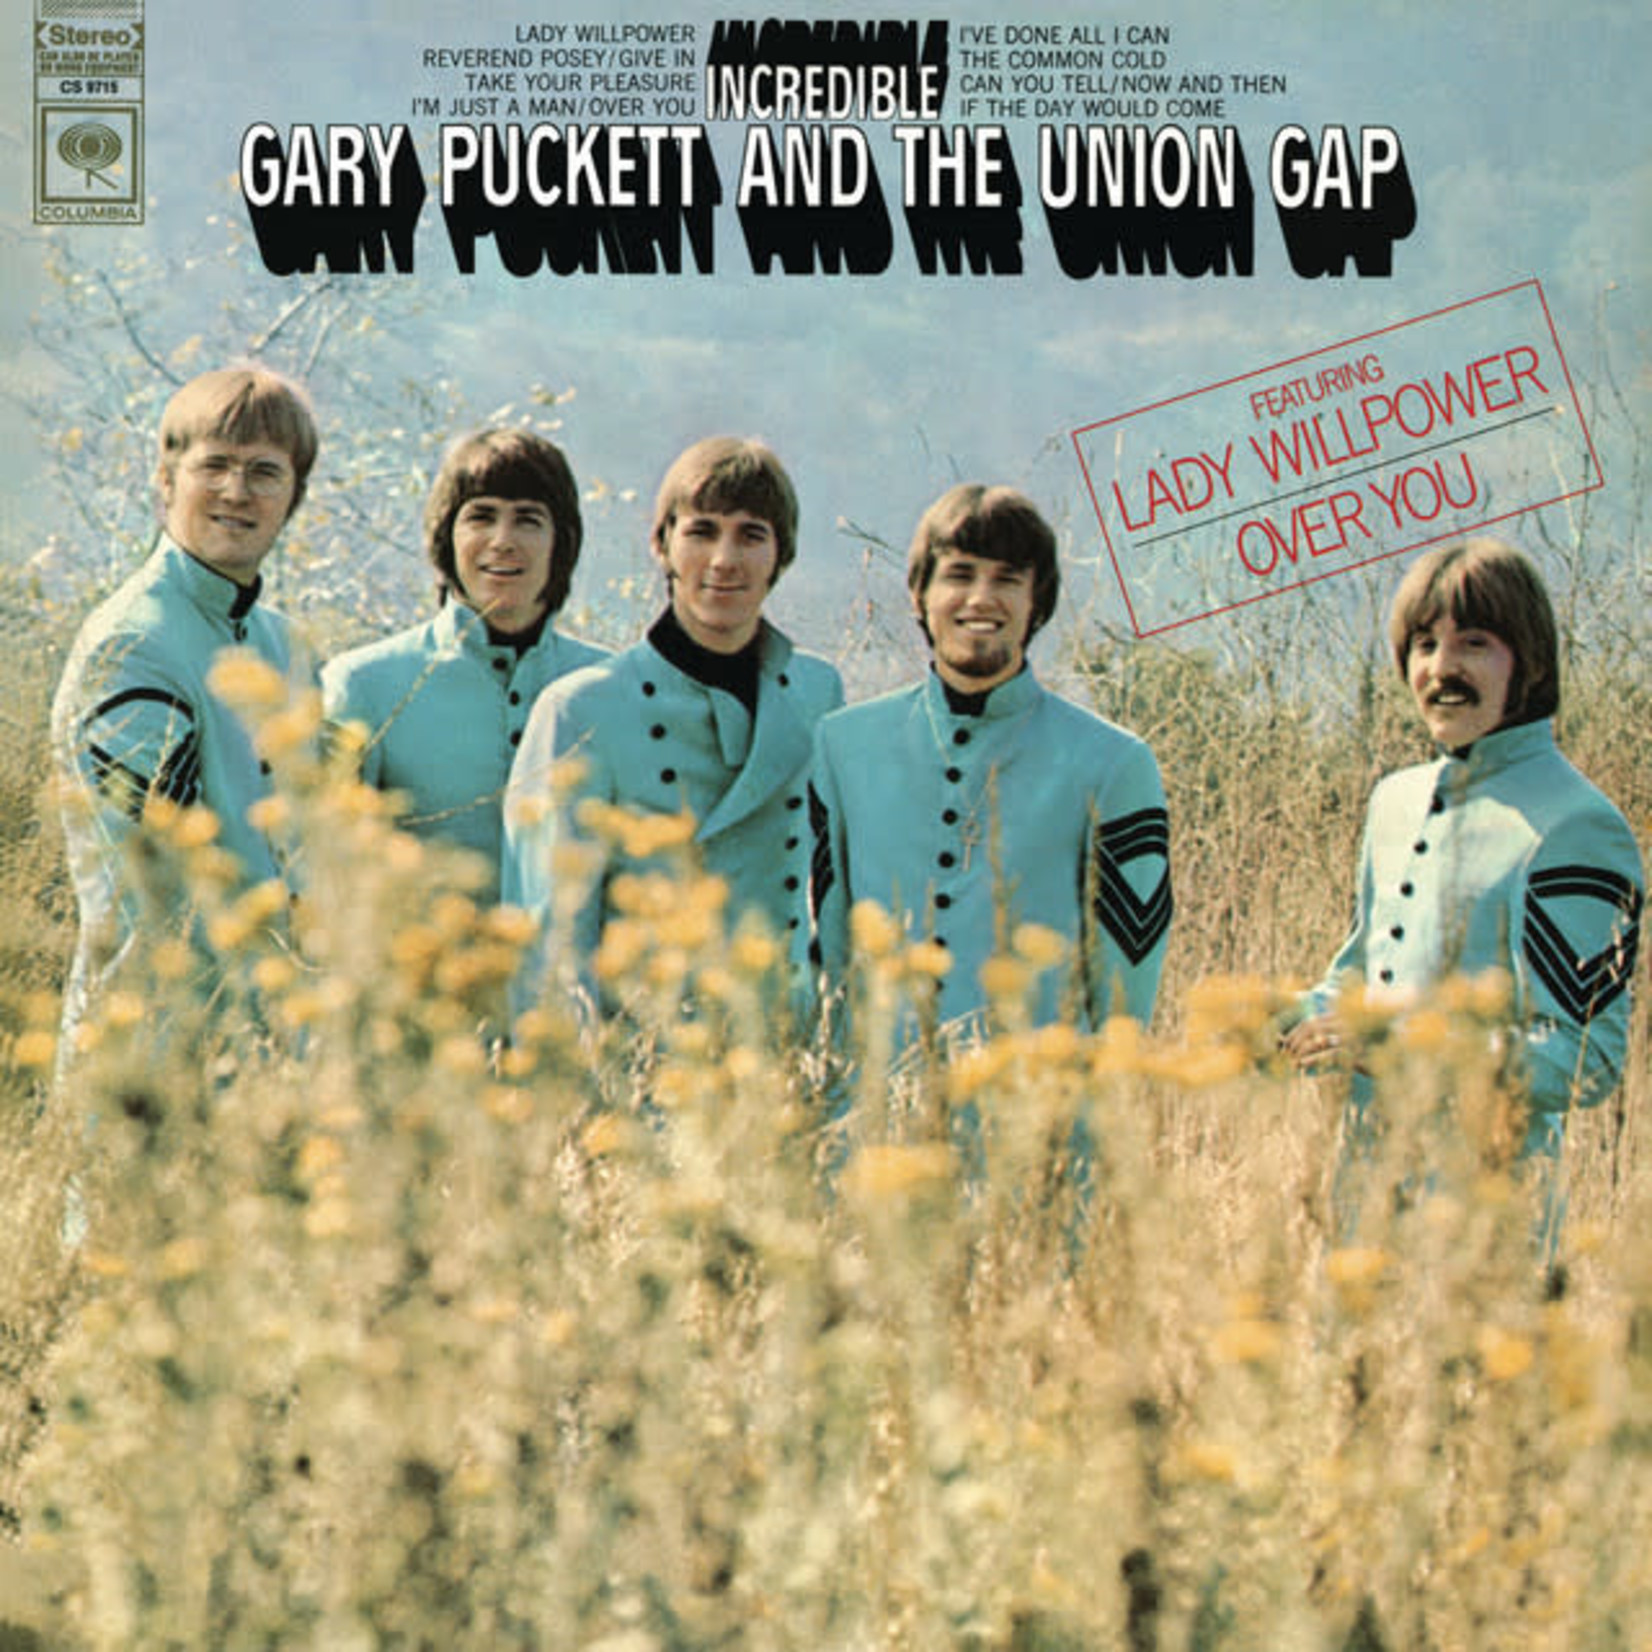 [Vintage] Gary Puckett & Union Gap - Incredible